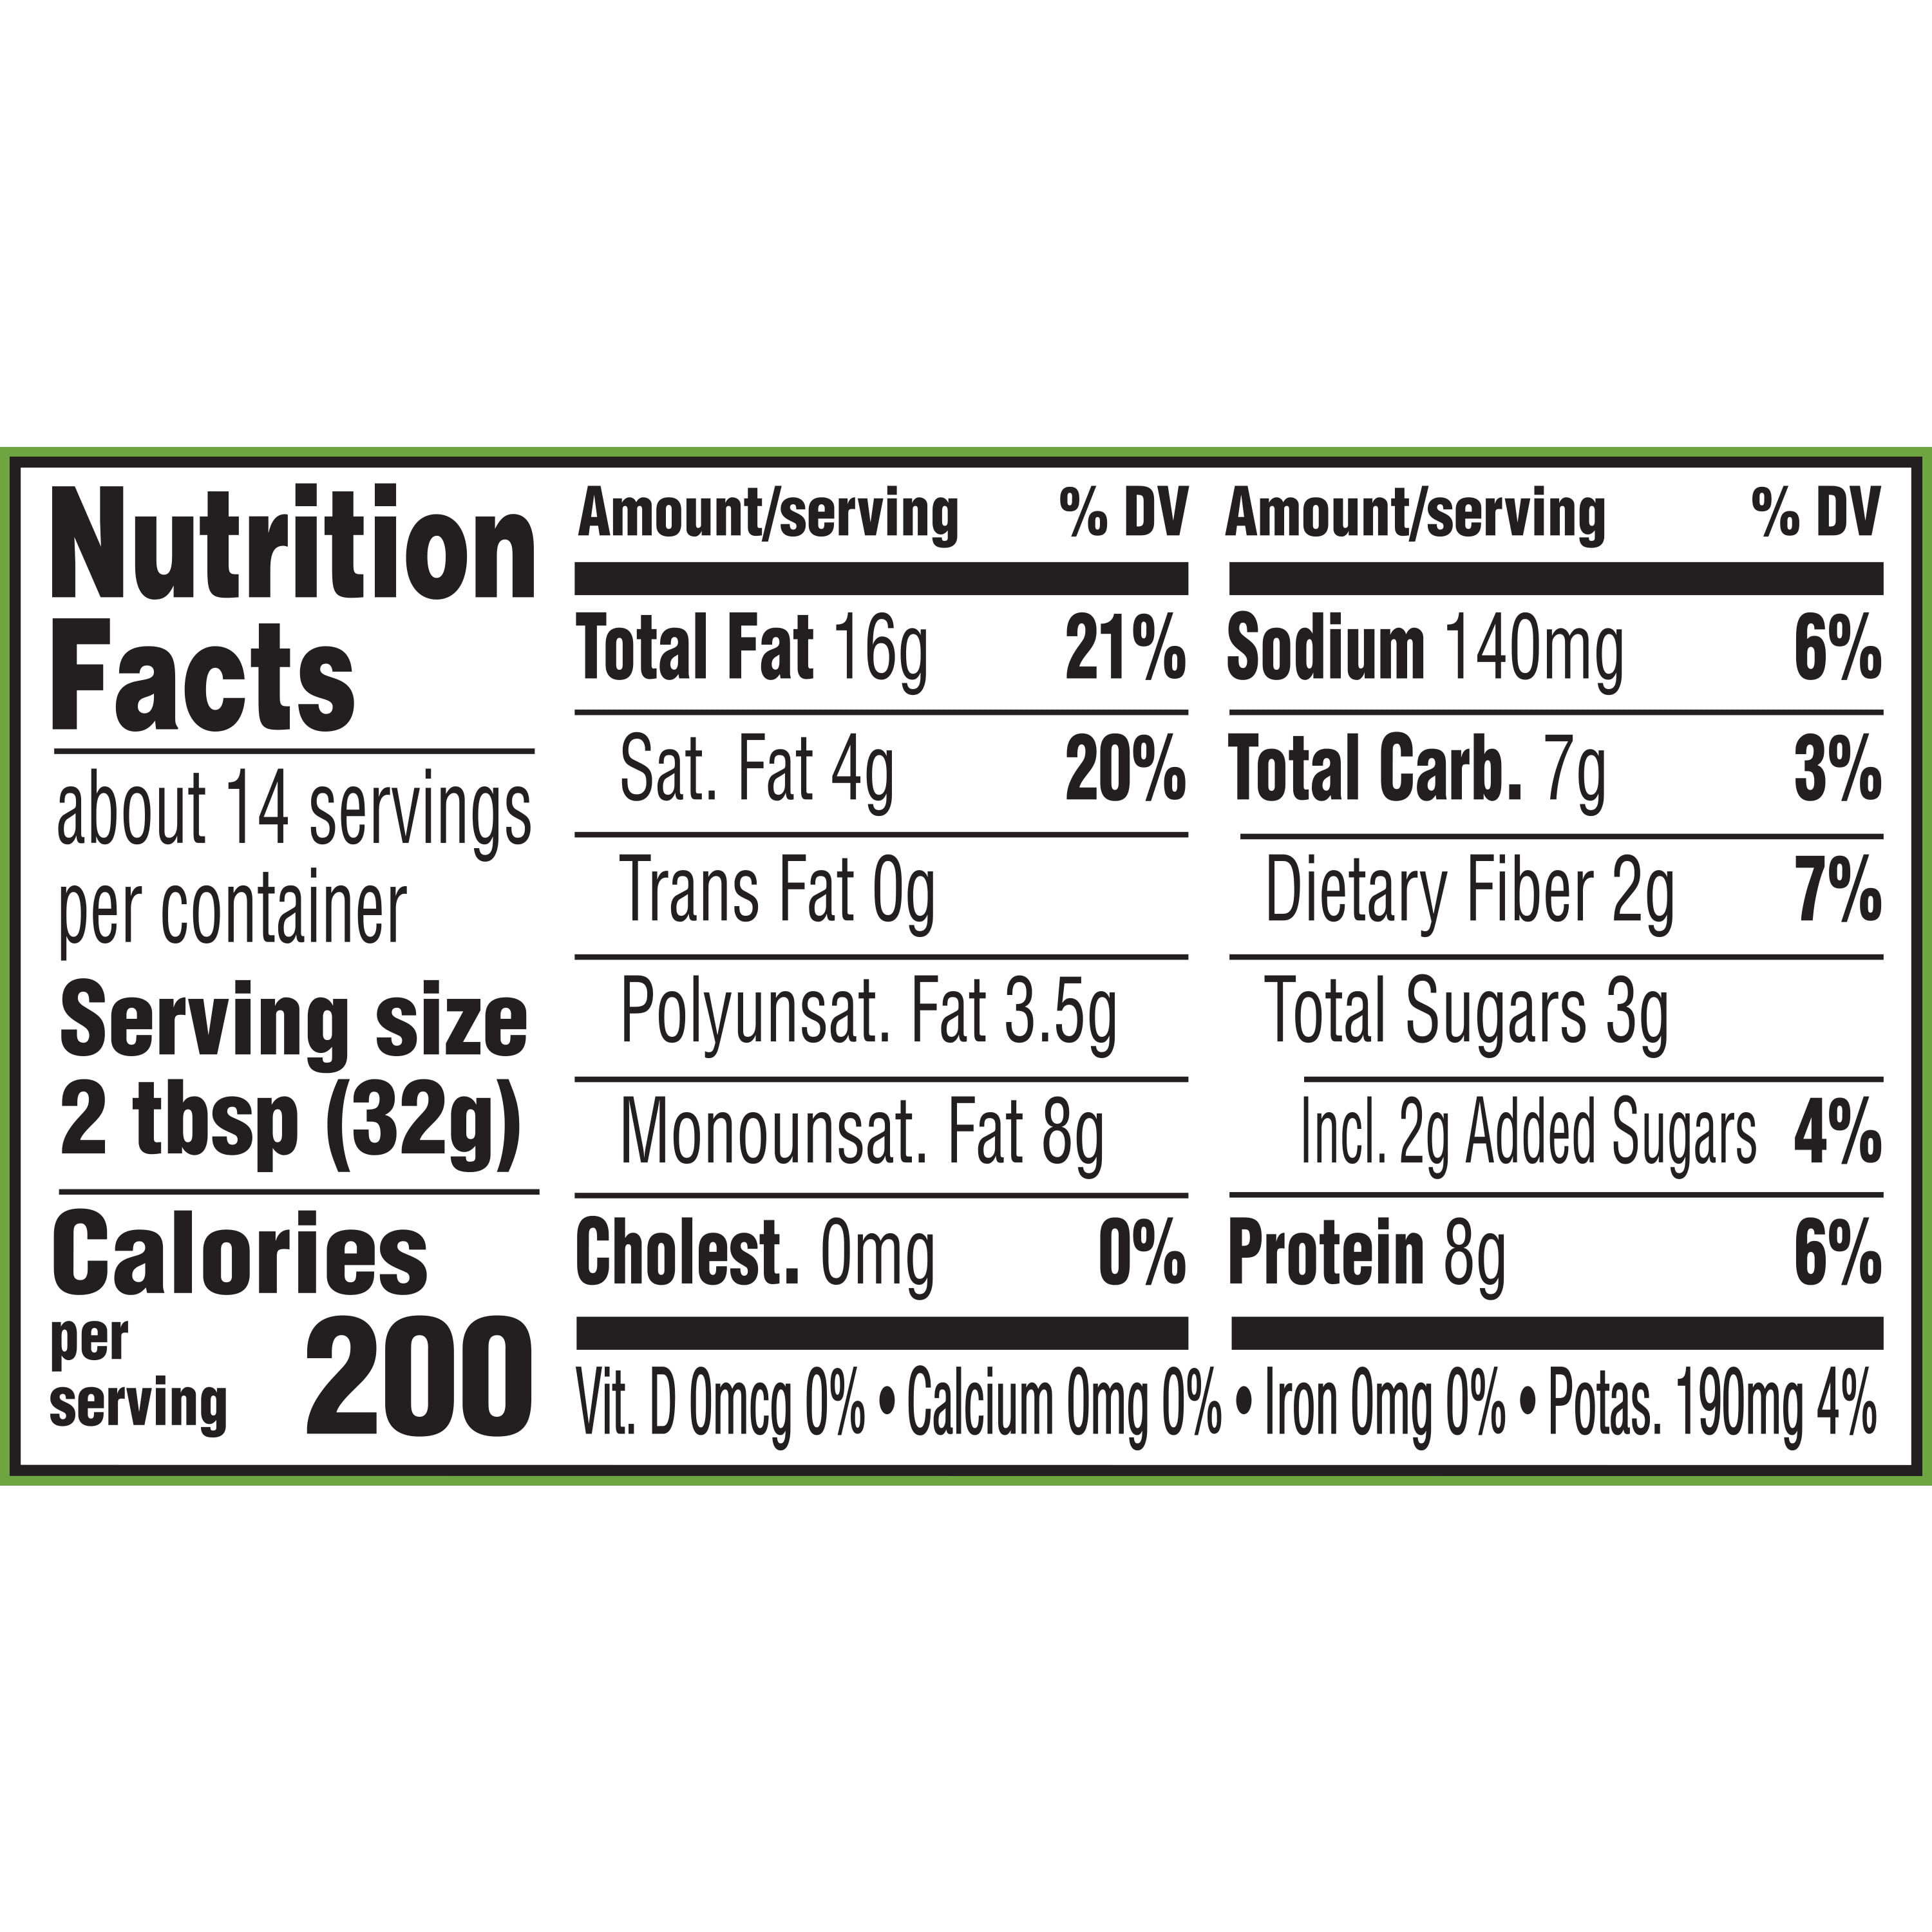  Smart Balance Creamy Peanut Butter, 16 oz, 4pk : Grocery &  Gourmet Food